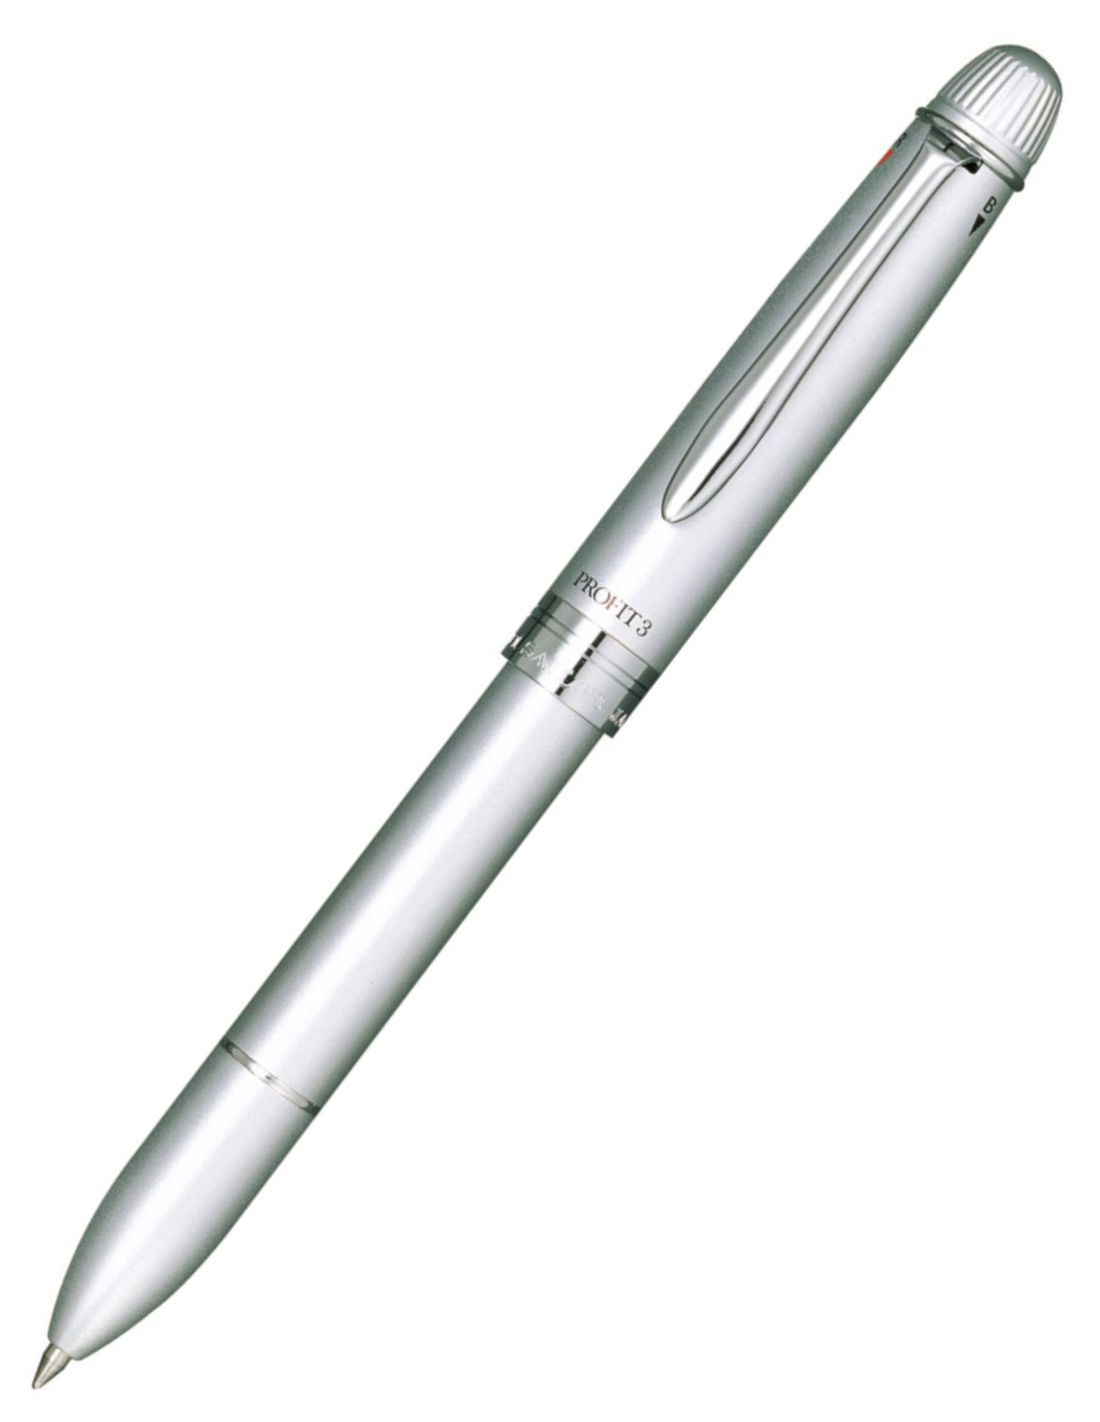 Sailor 1911 Multifunction Pen 3in1 - 2 colors Ballpoint Pen & Mechanical Pencil - Silver